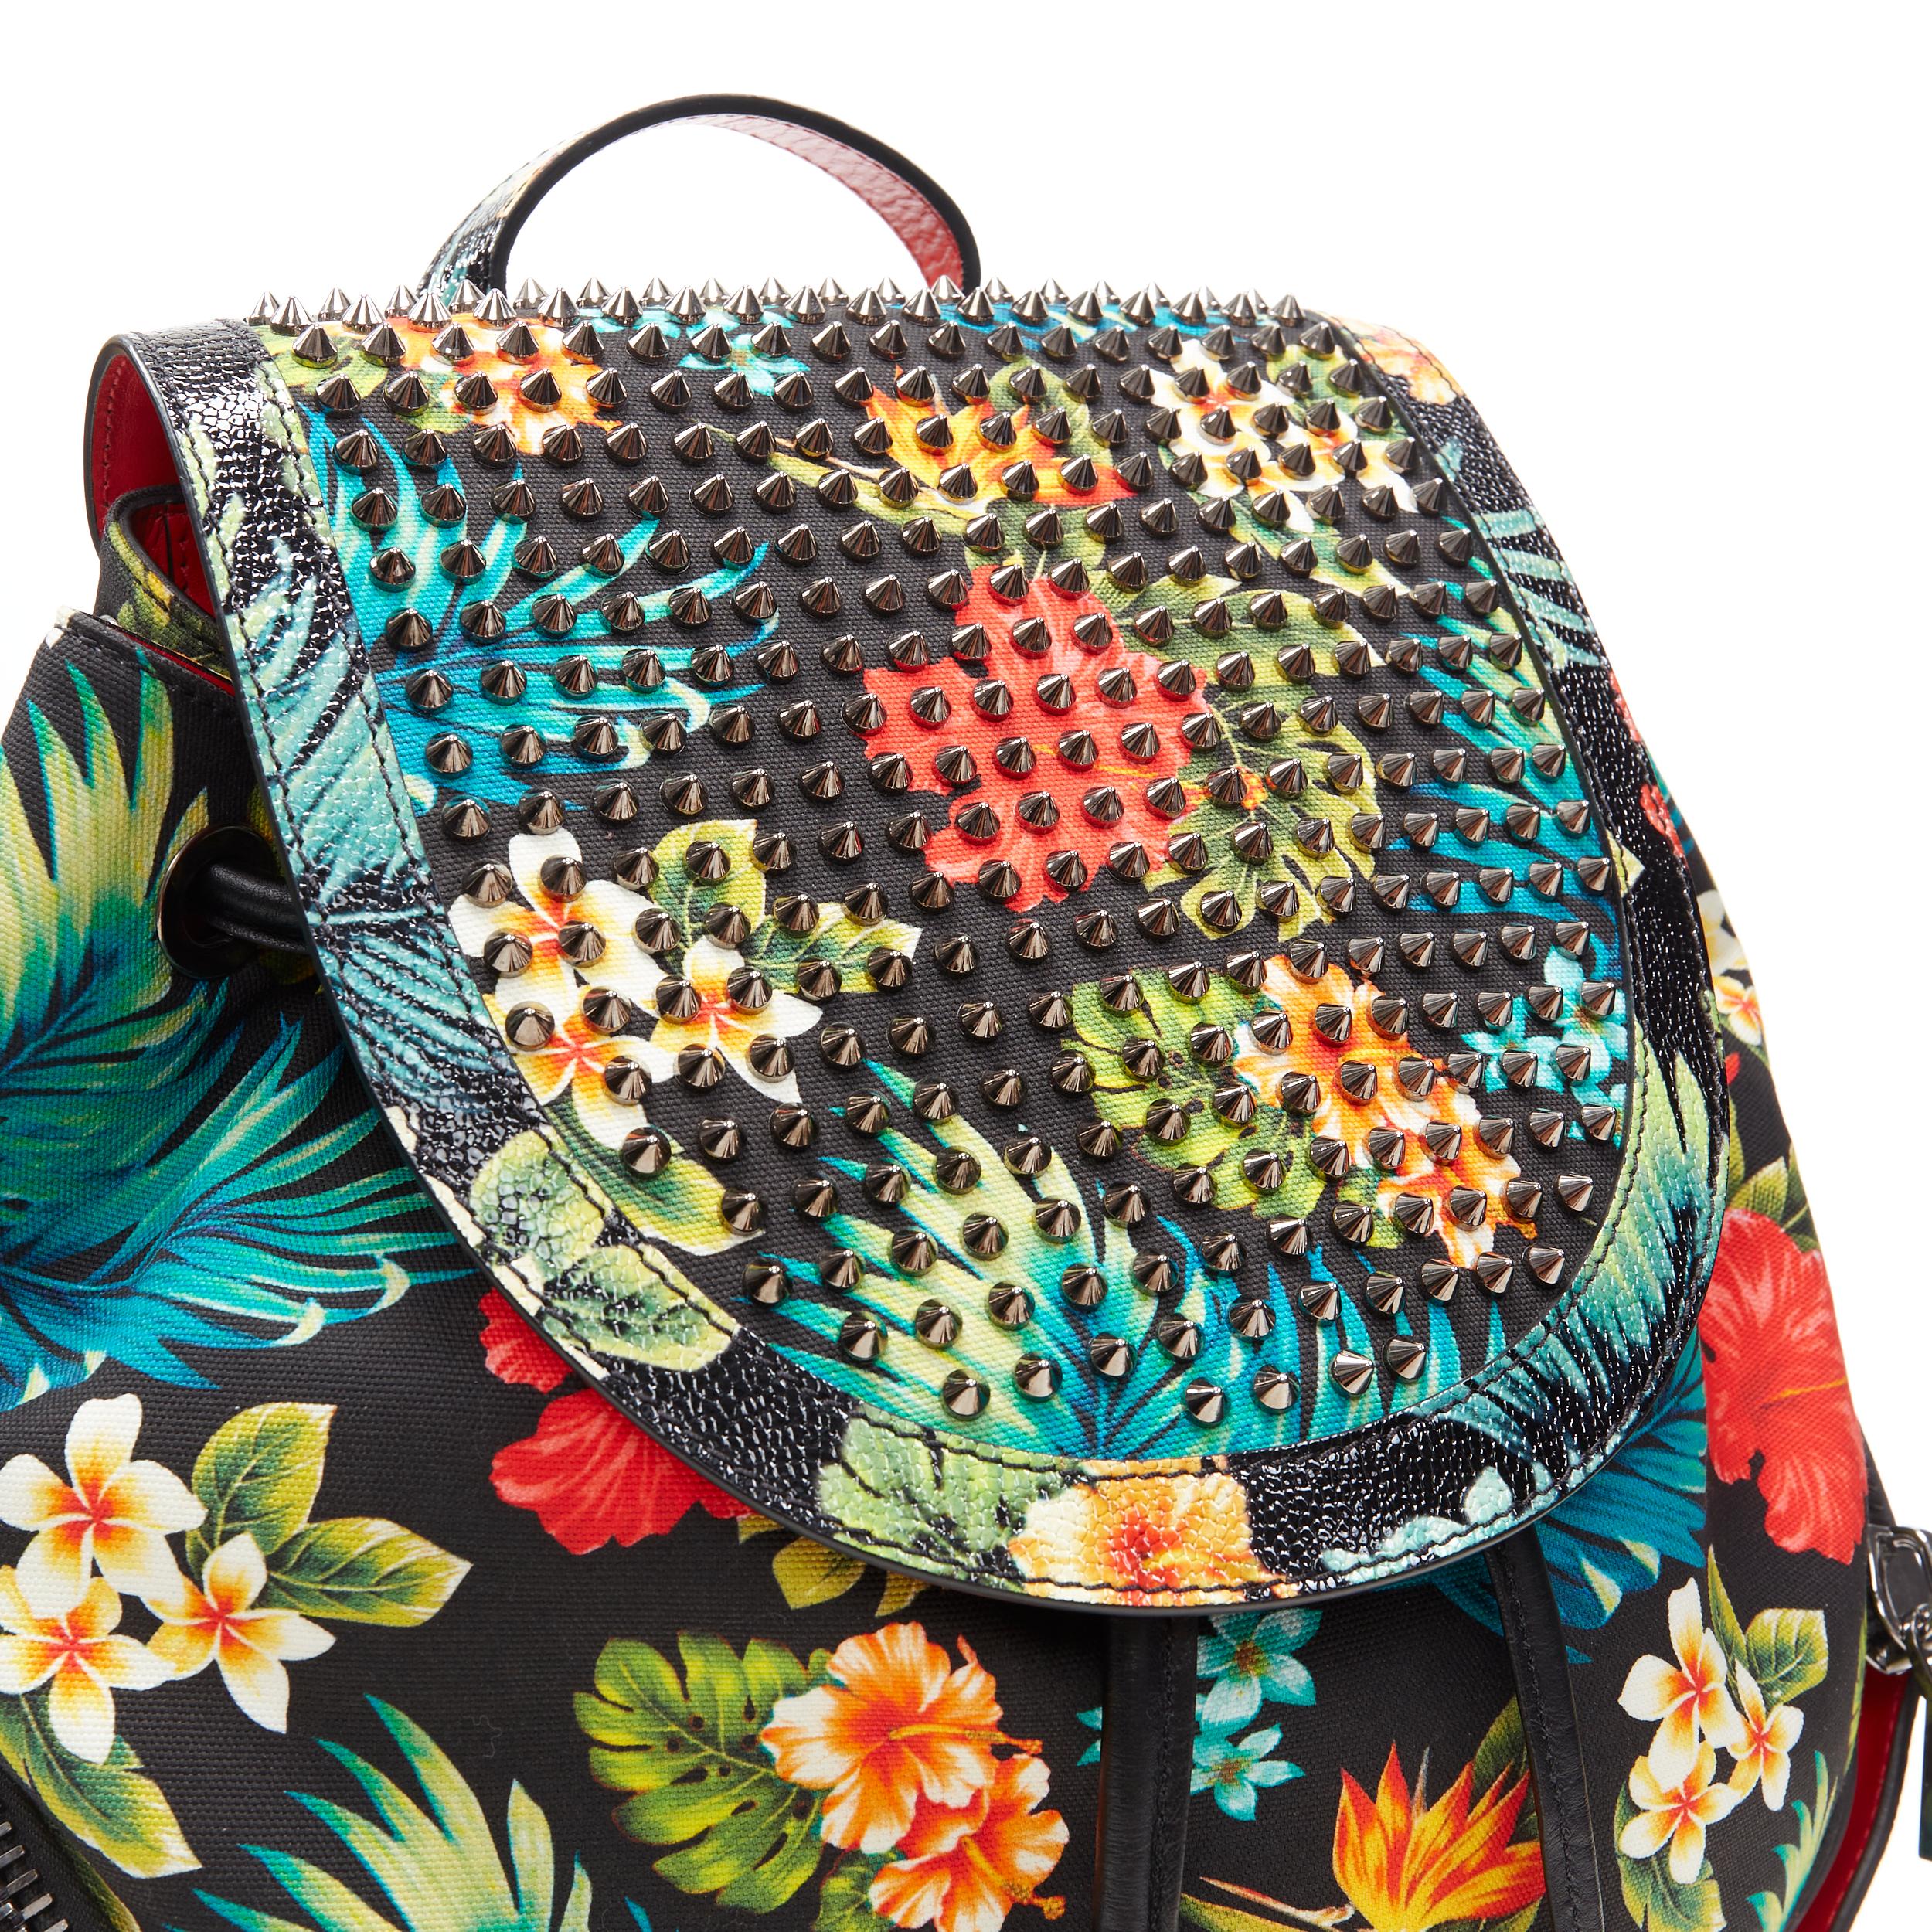 Men's CHRISTIAN LOUBOUTIN Explorafunk tropical floral canvas spike stud backpack bag